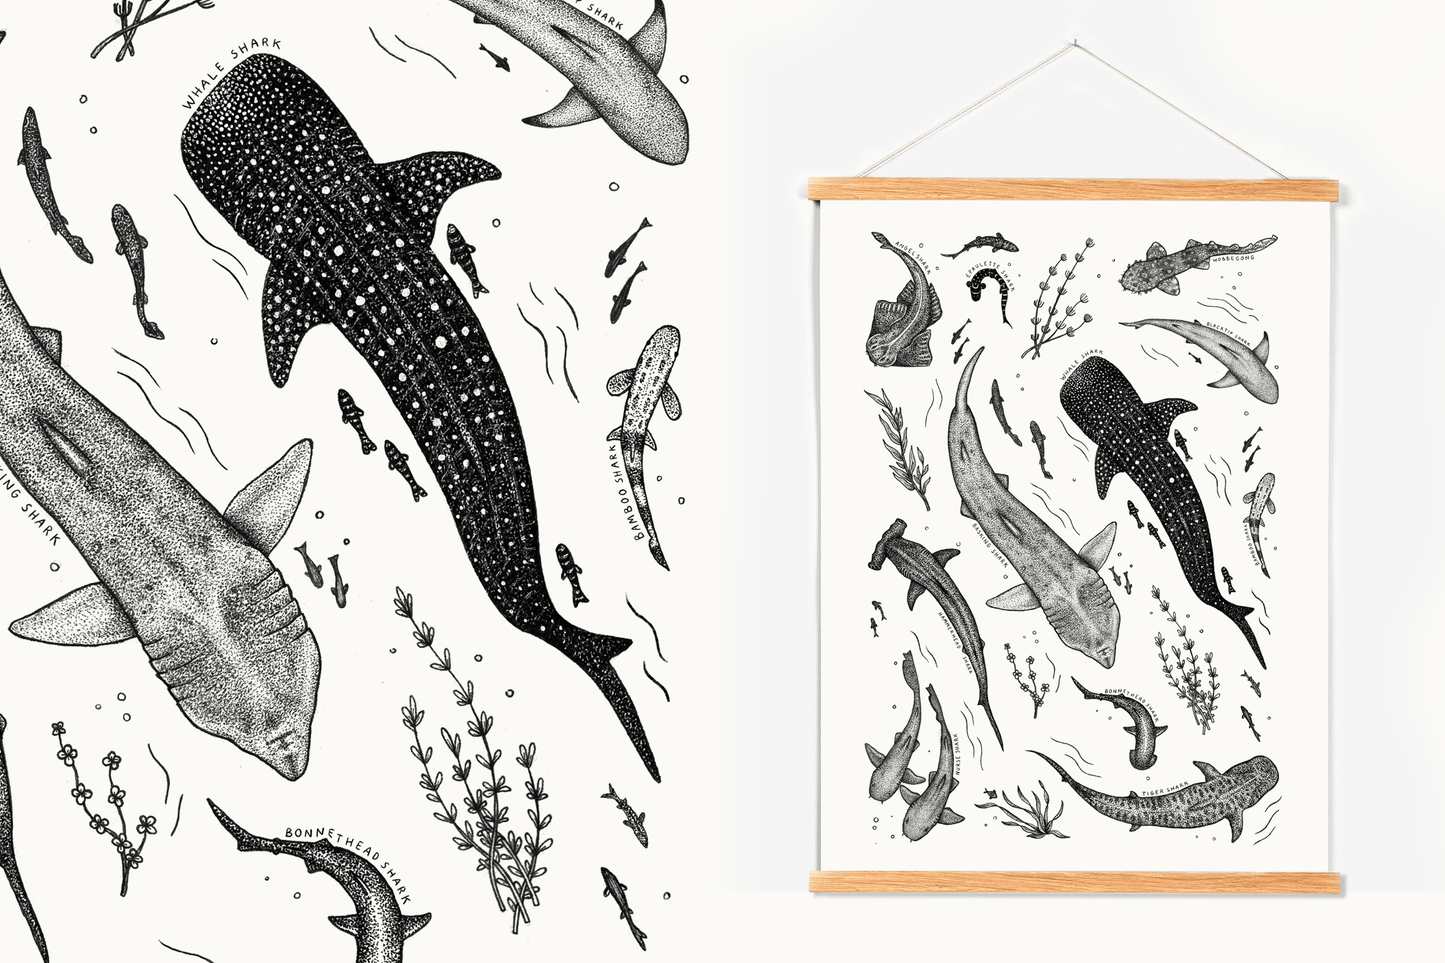 Styngvi A4 Print Celebratory Shark Print - Limited edition A4 print